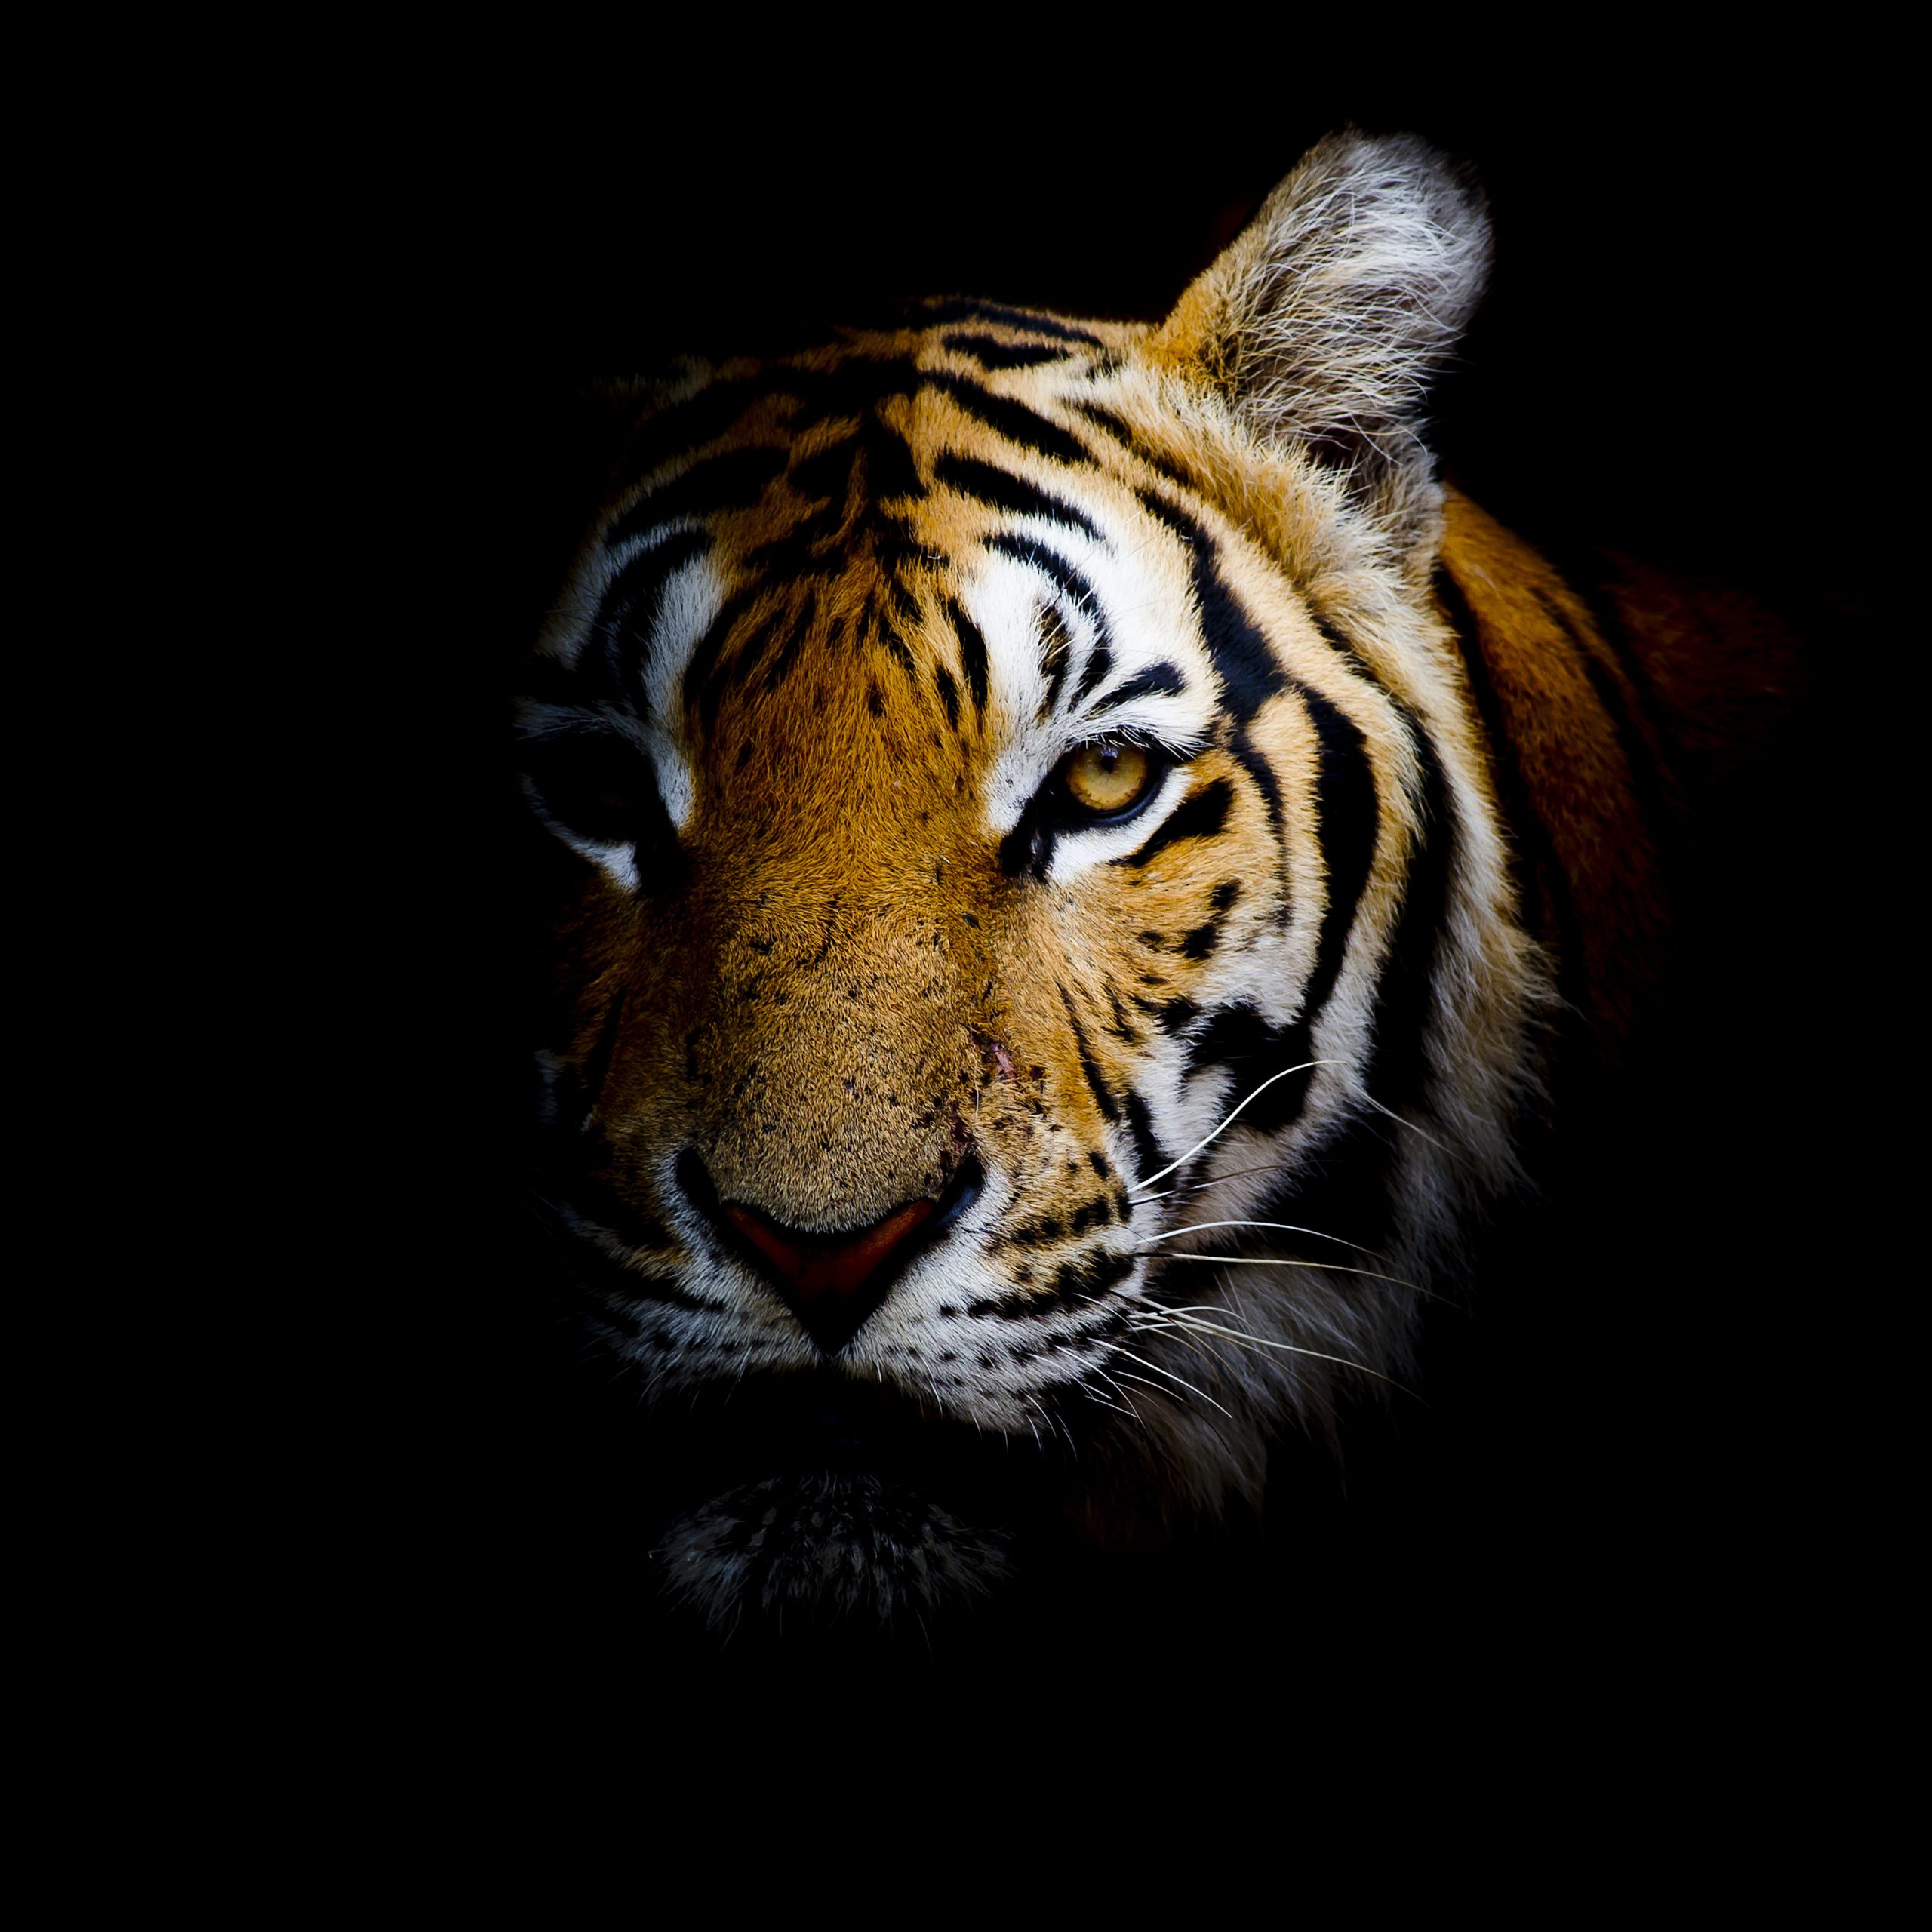 https://depositphotos.com/65127259/stock-photo-tiger-background.html